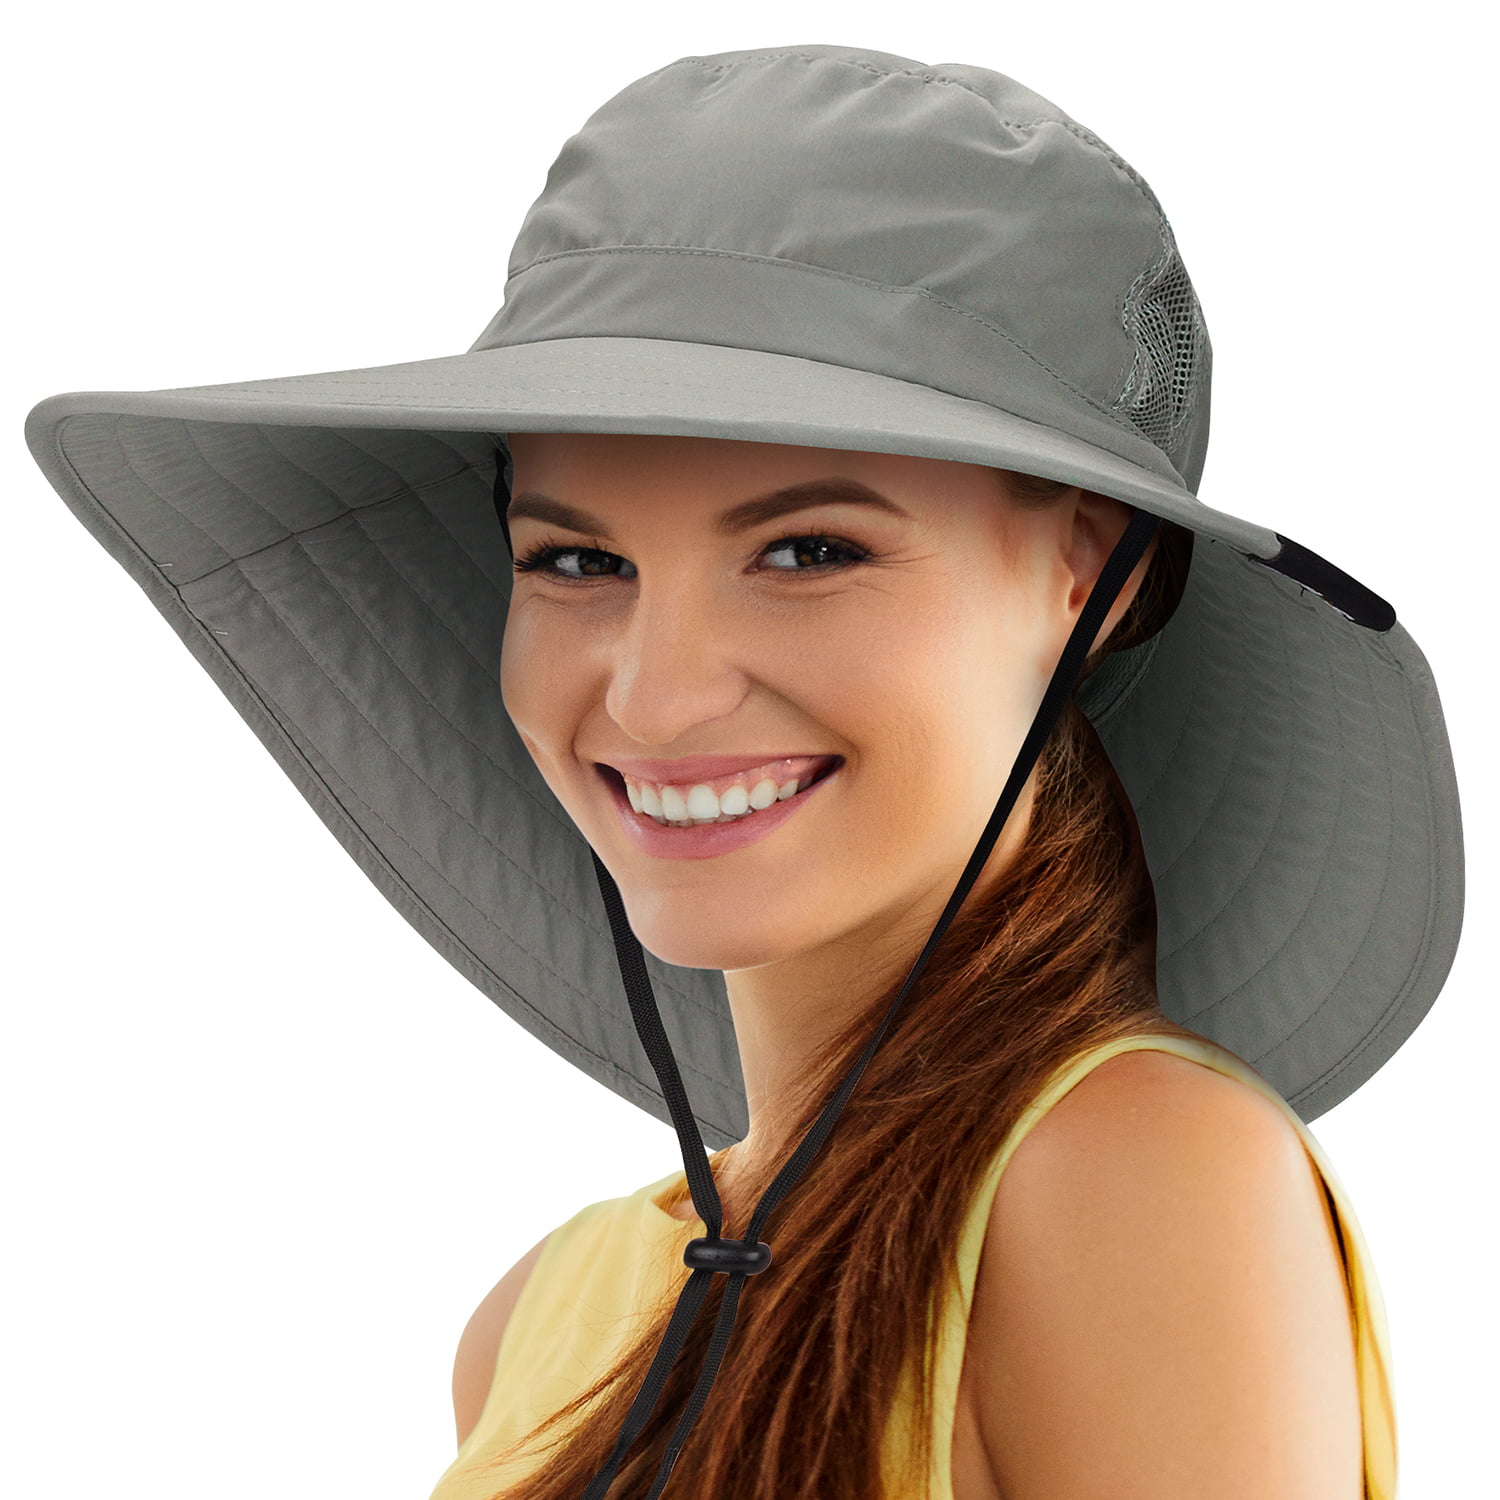 LIOOBO Sun Protection Bucket Cap Neck Face Flap Hat Foldable Fishing Hat for Men Women Outdoor Fishing Camping Hiking